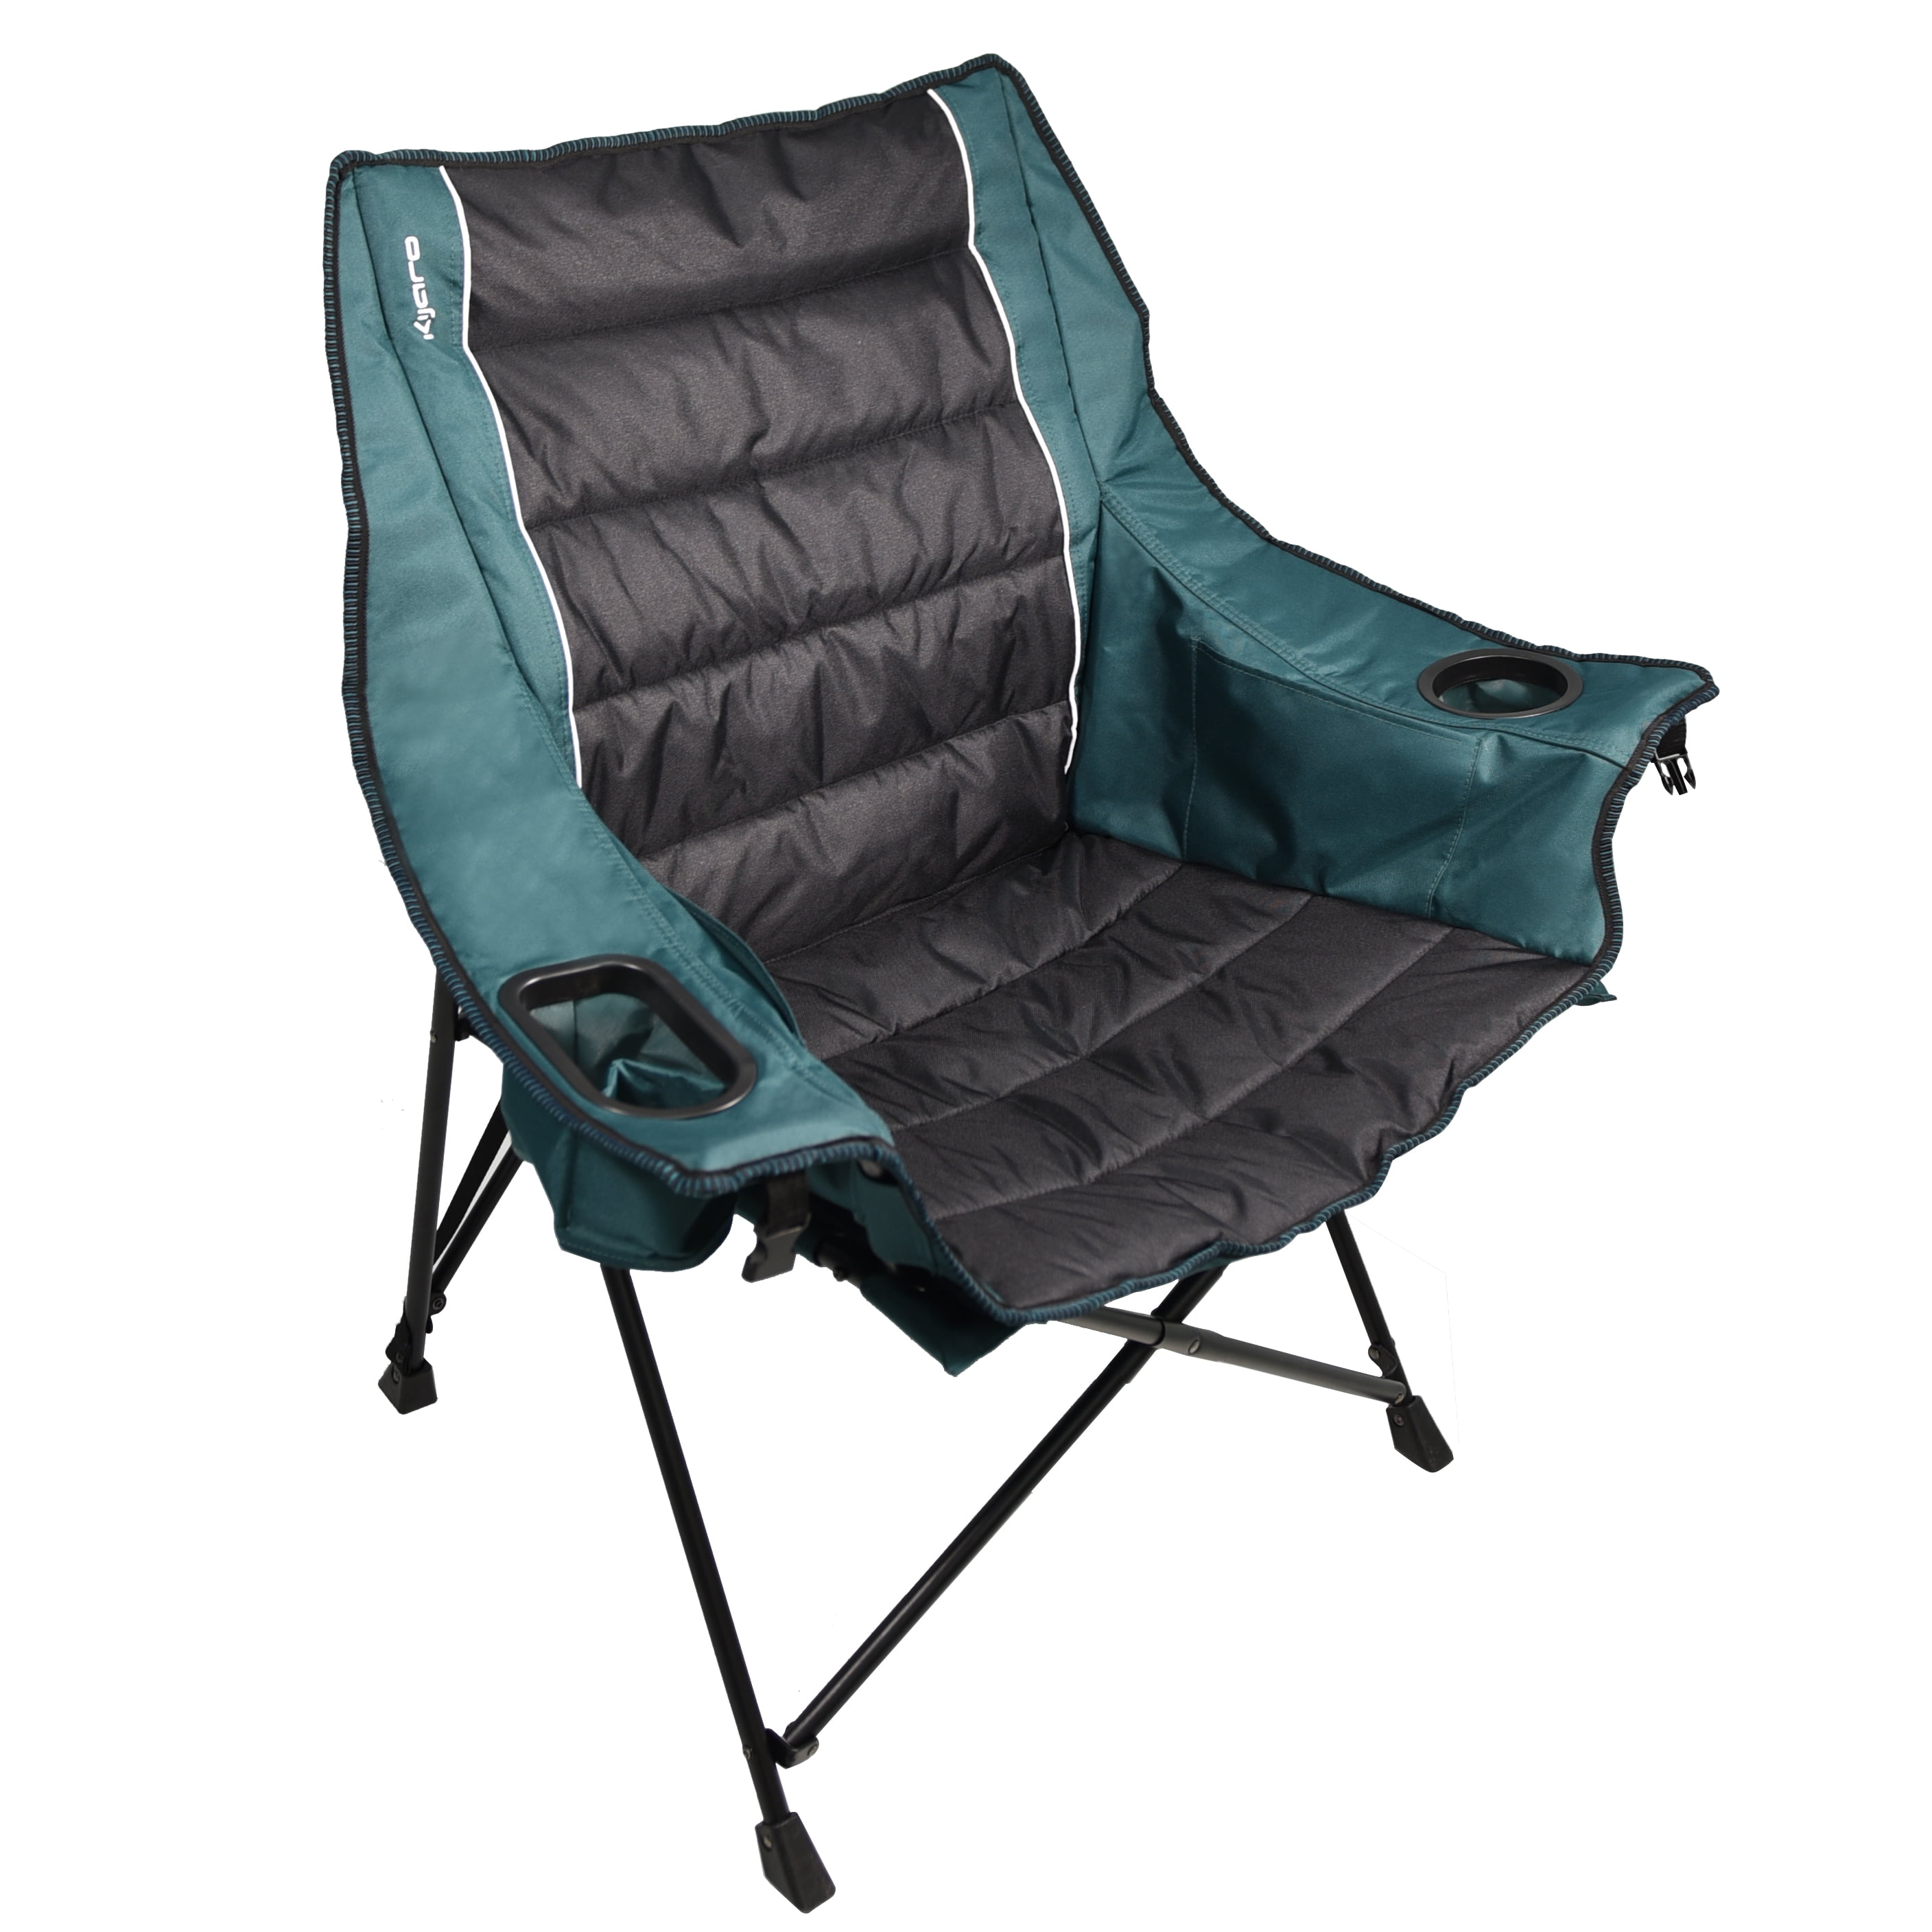 Ozark Trail SW18C066 2 Person Conversation Chair for sale online